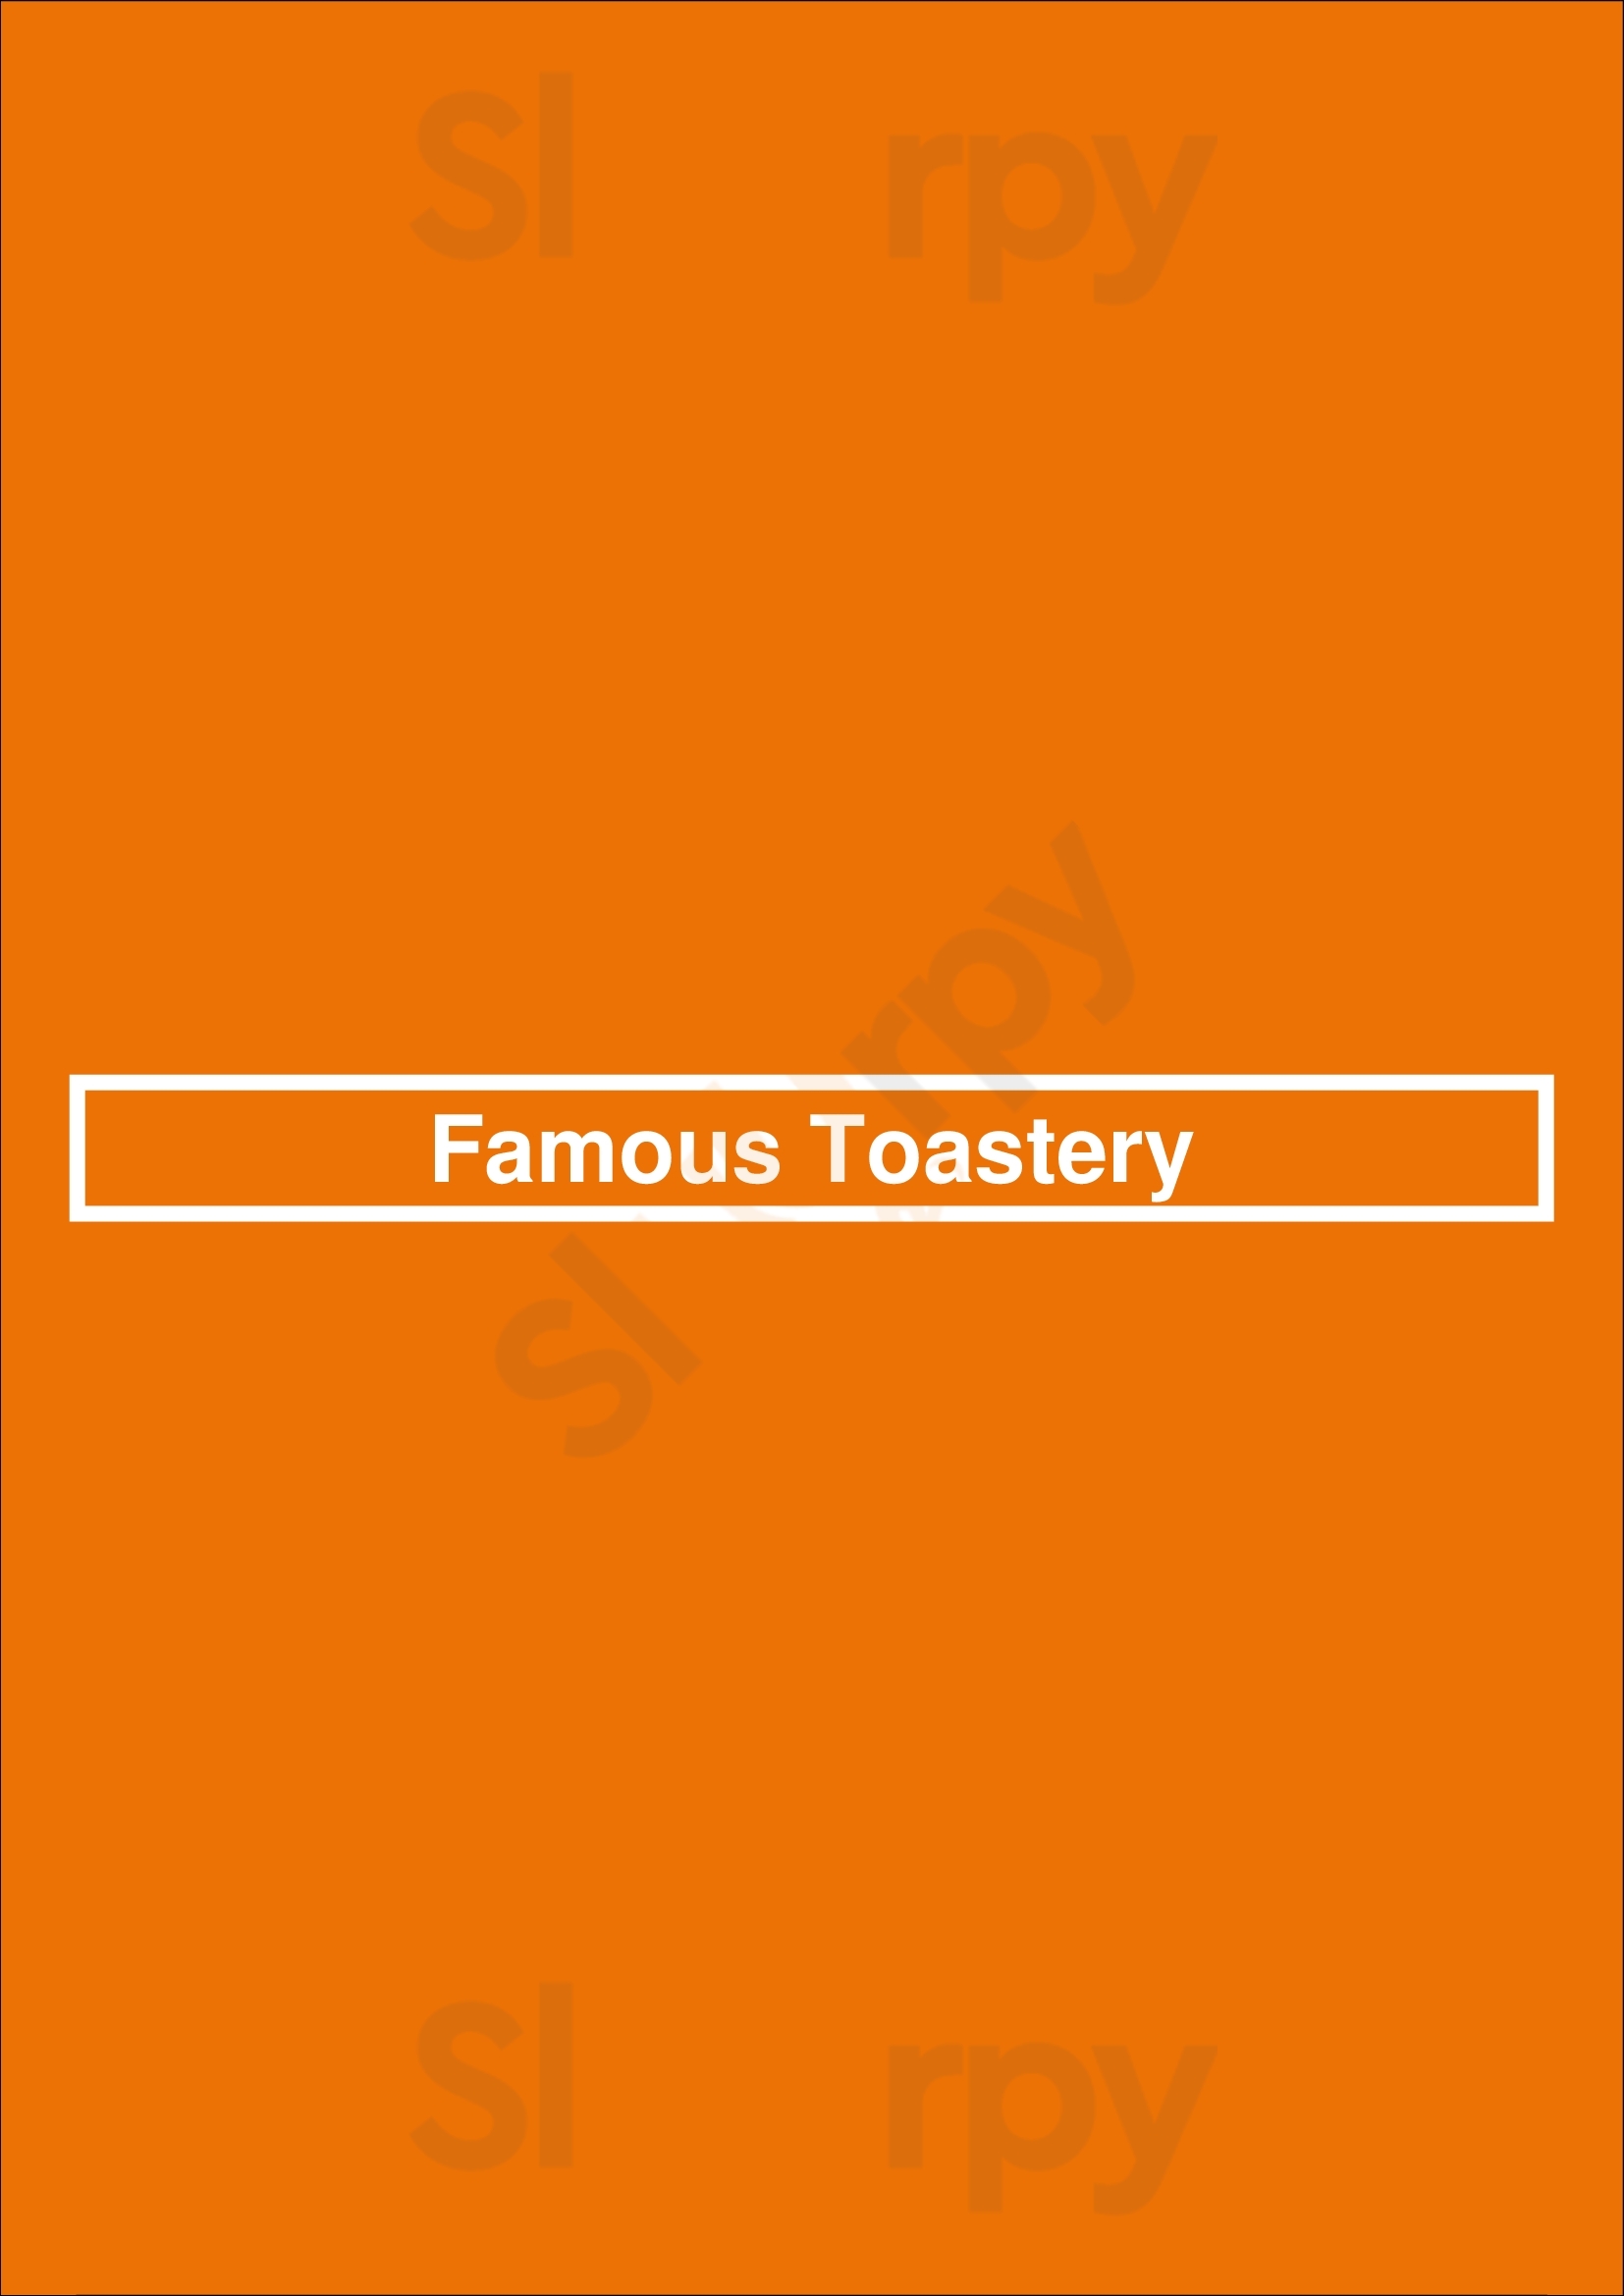 Famous Toastery Charlotte Menu - 1